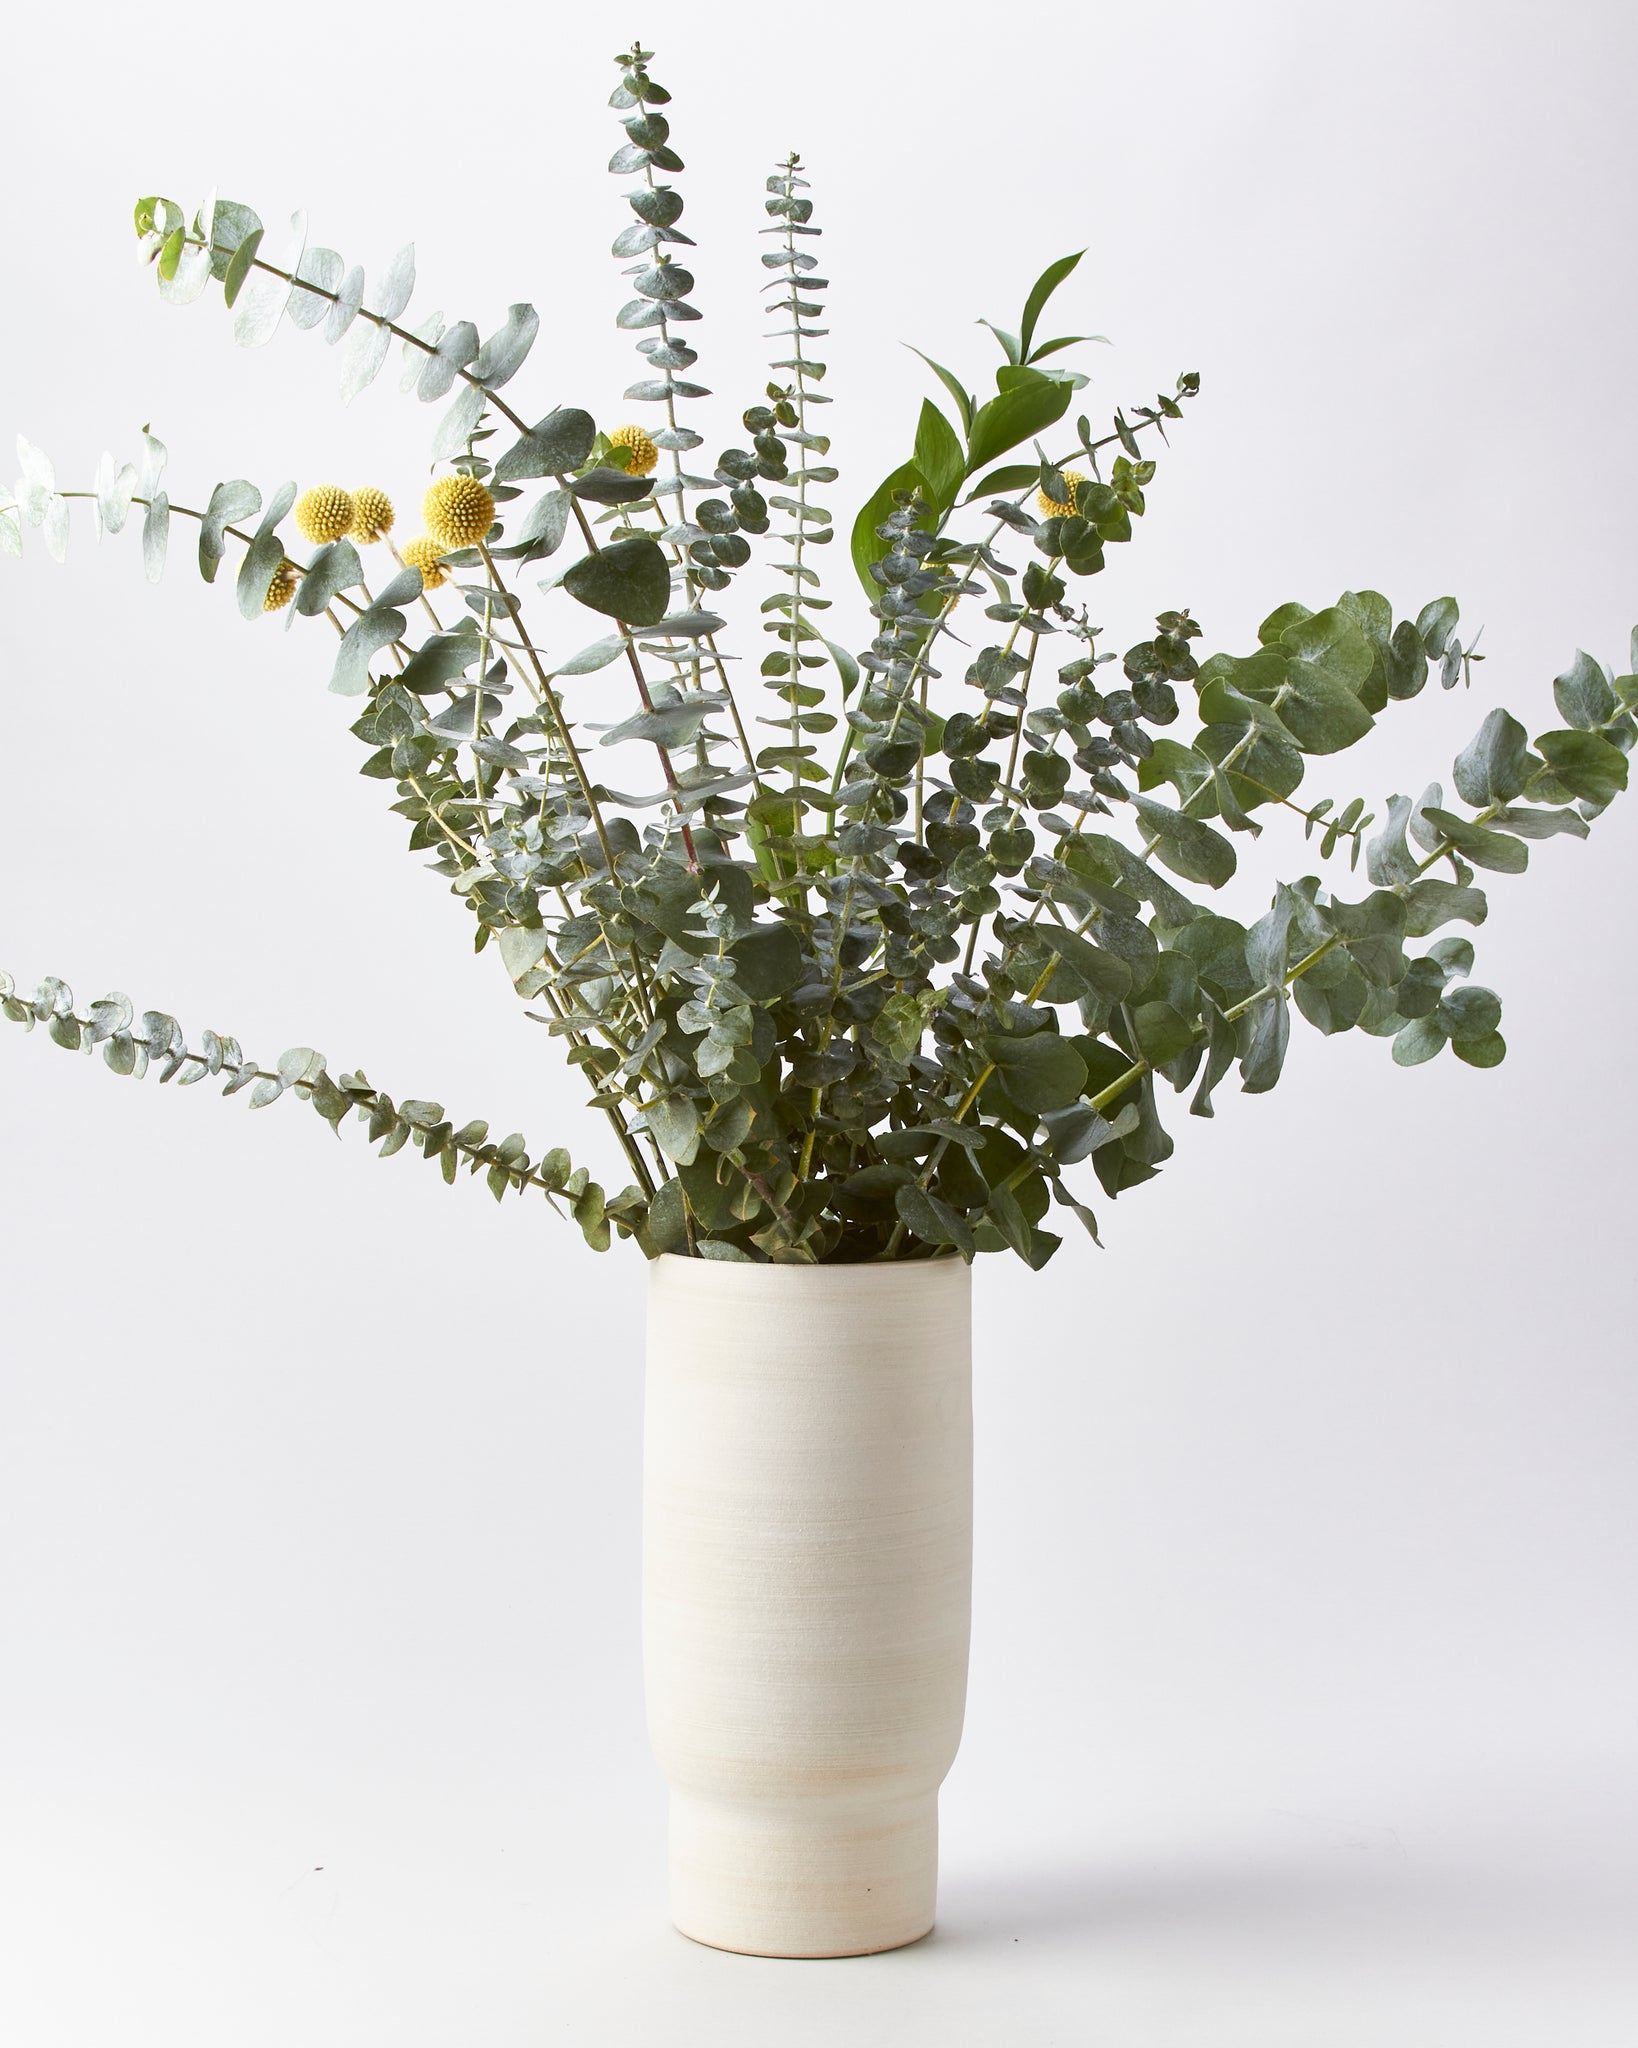 Tall Linen Vase